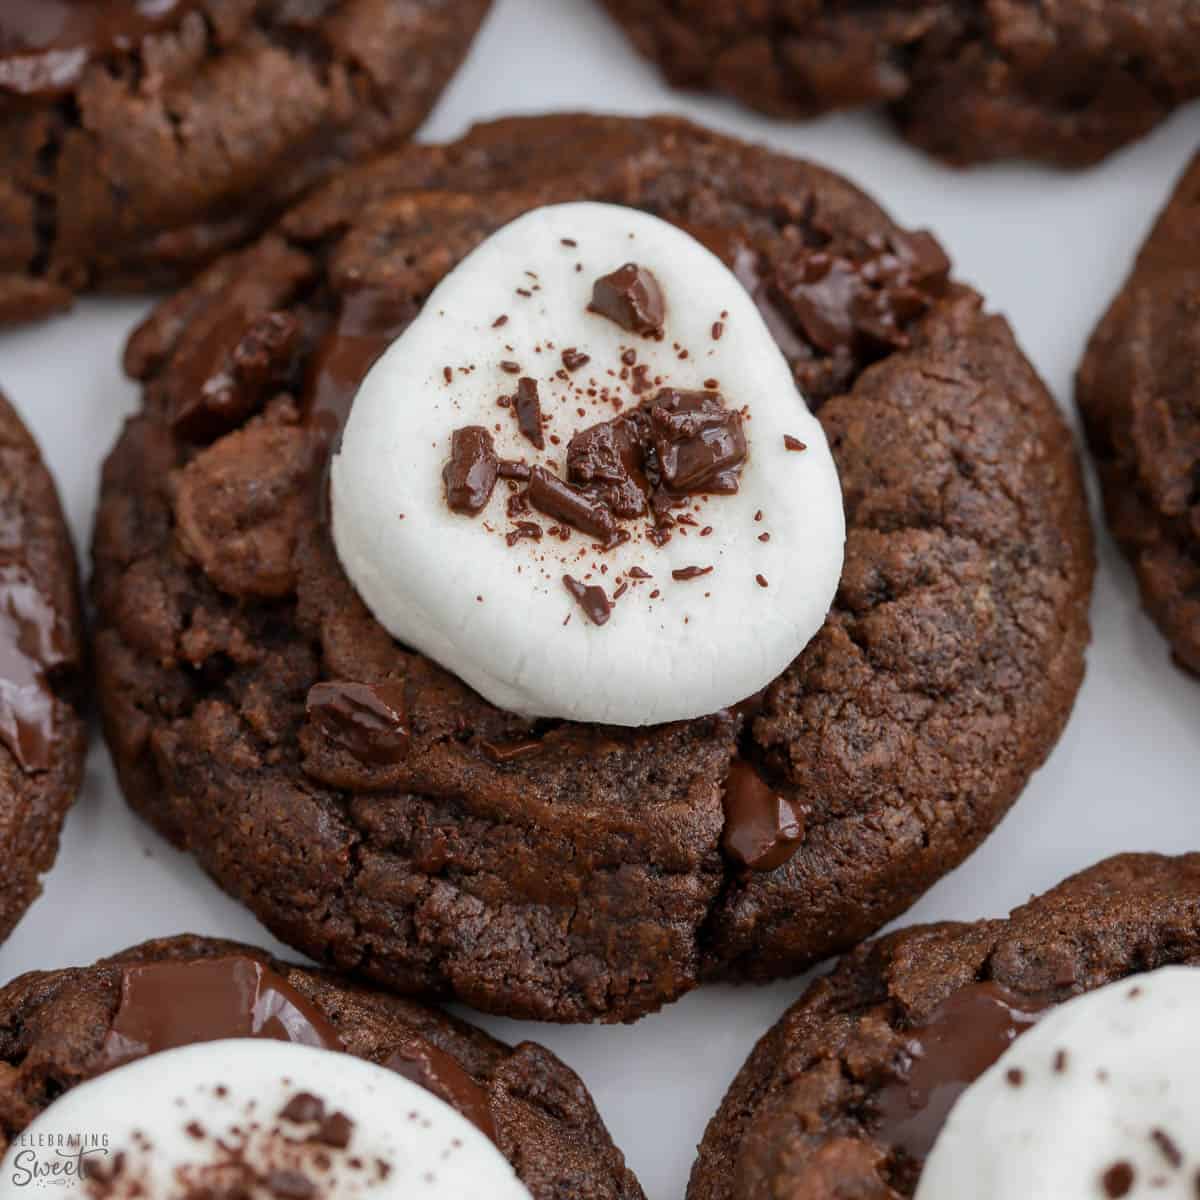 https://celebratingsweets.com/wp-content/uploads/2020/12/Hot-Chocolate-Cookies-1-3.jpg